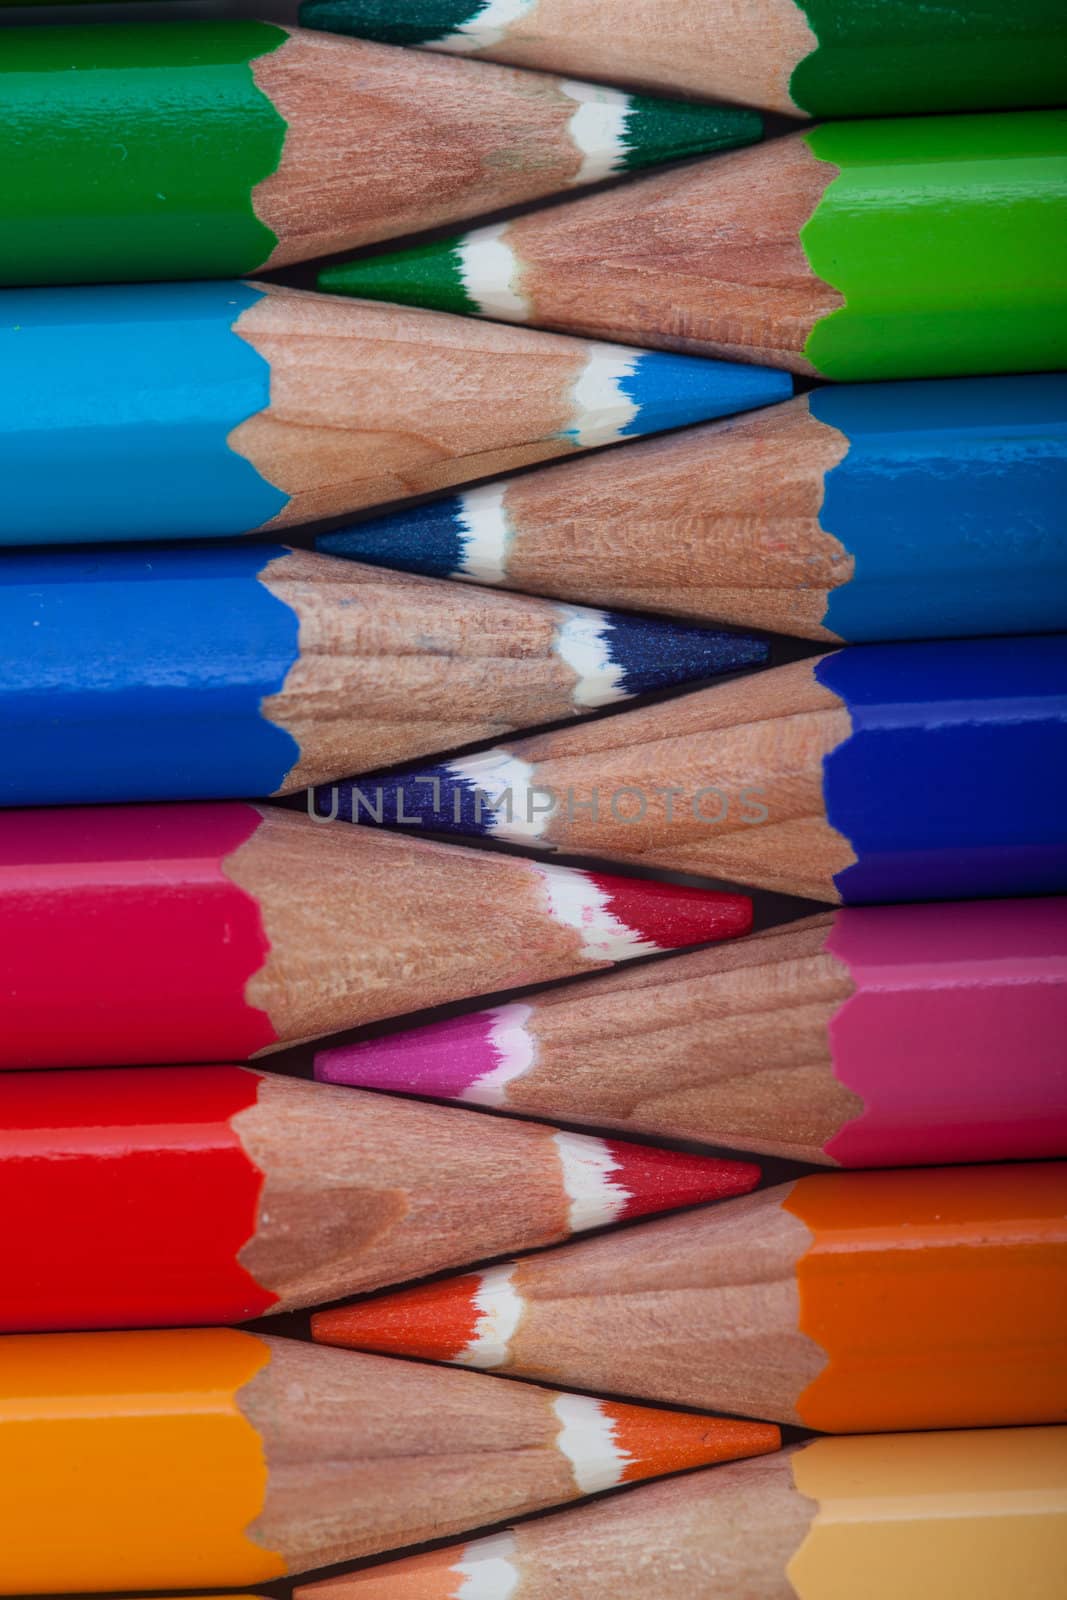 Colored Pencils by Daniel_Wiedemann